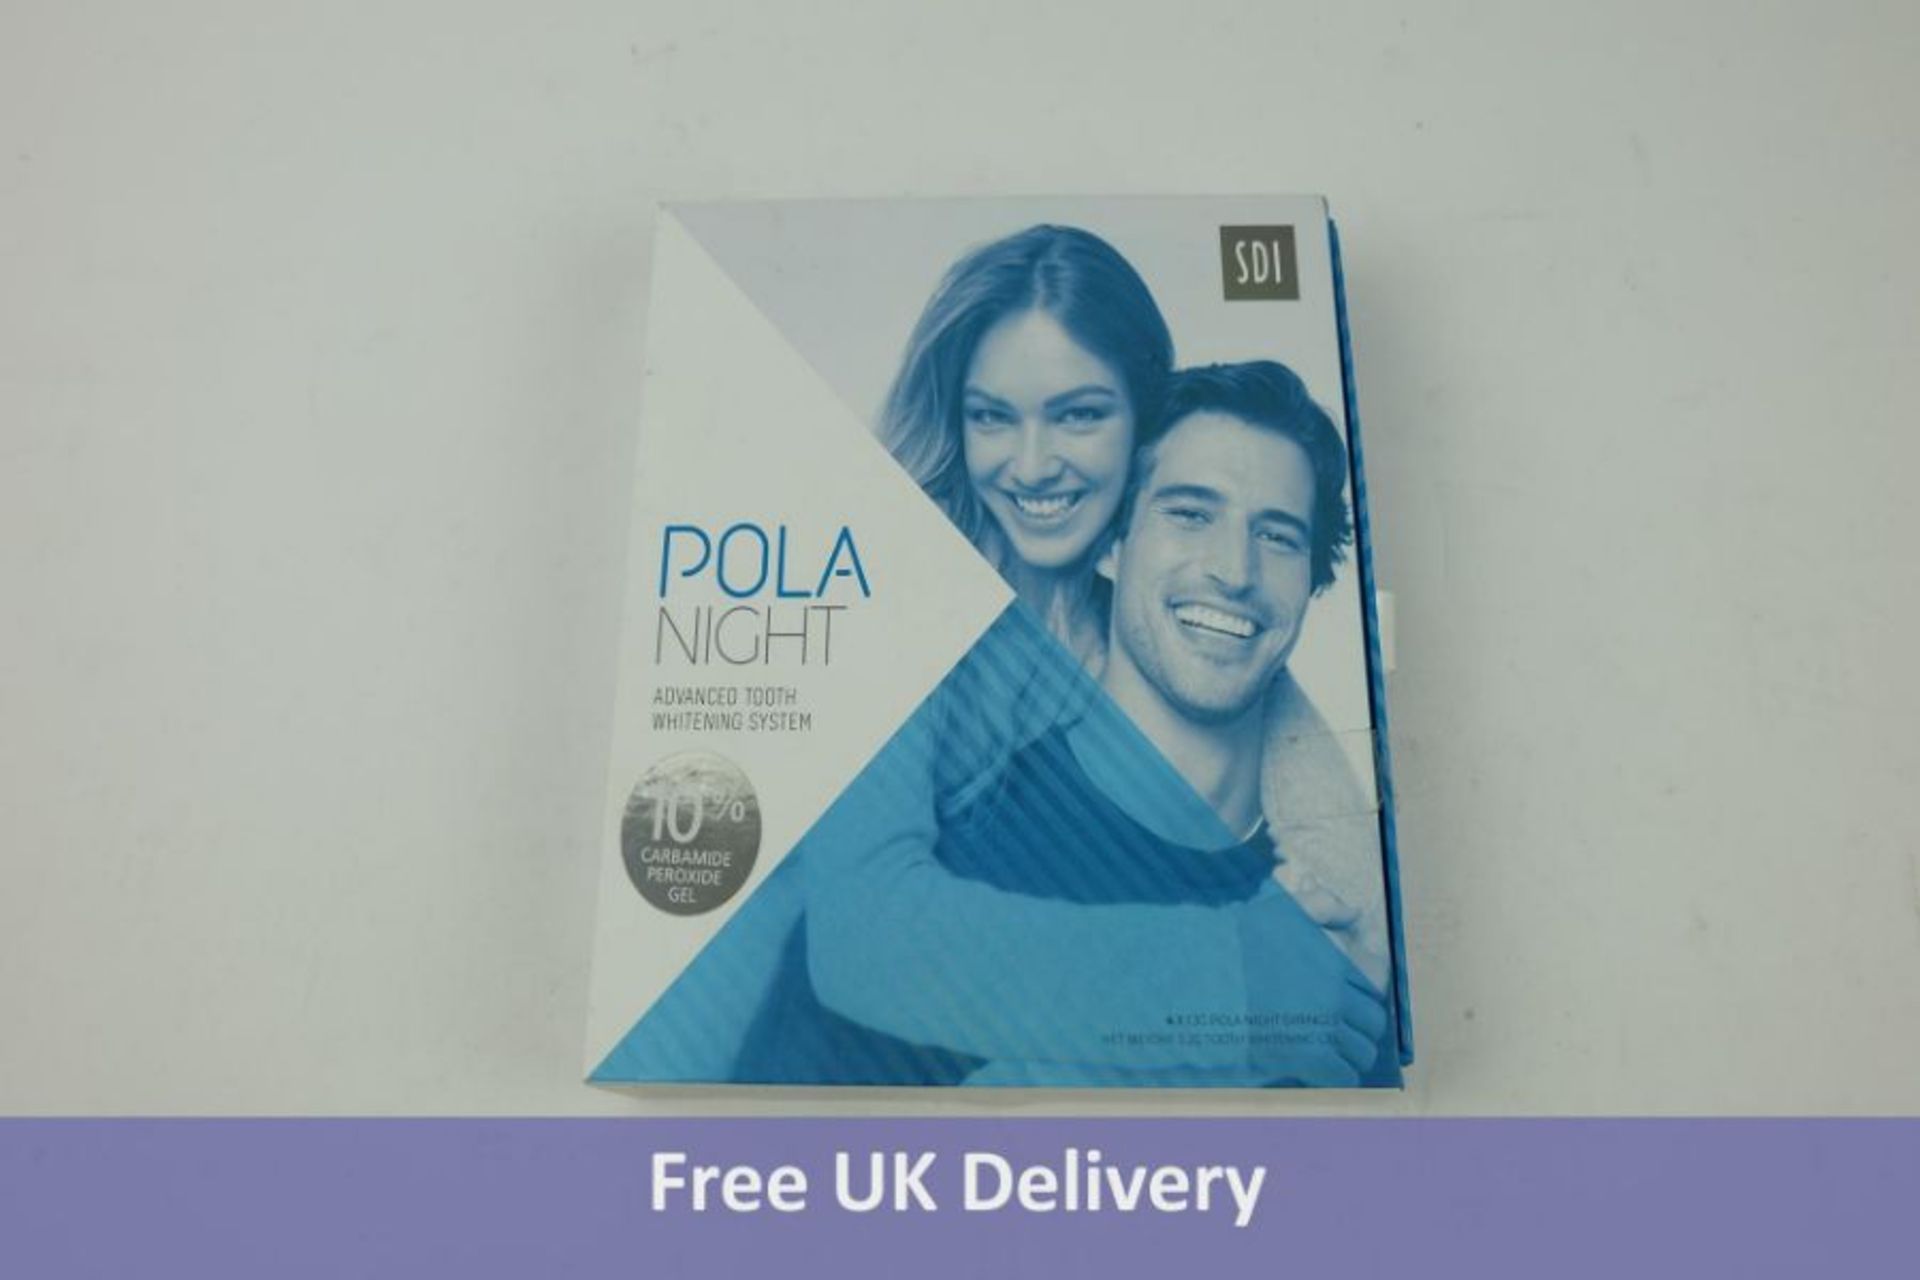 SDI Tooth Whitening Gel - Pola Day 7.5% - Home Kit, Exp 05/23